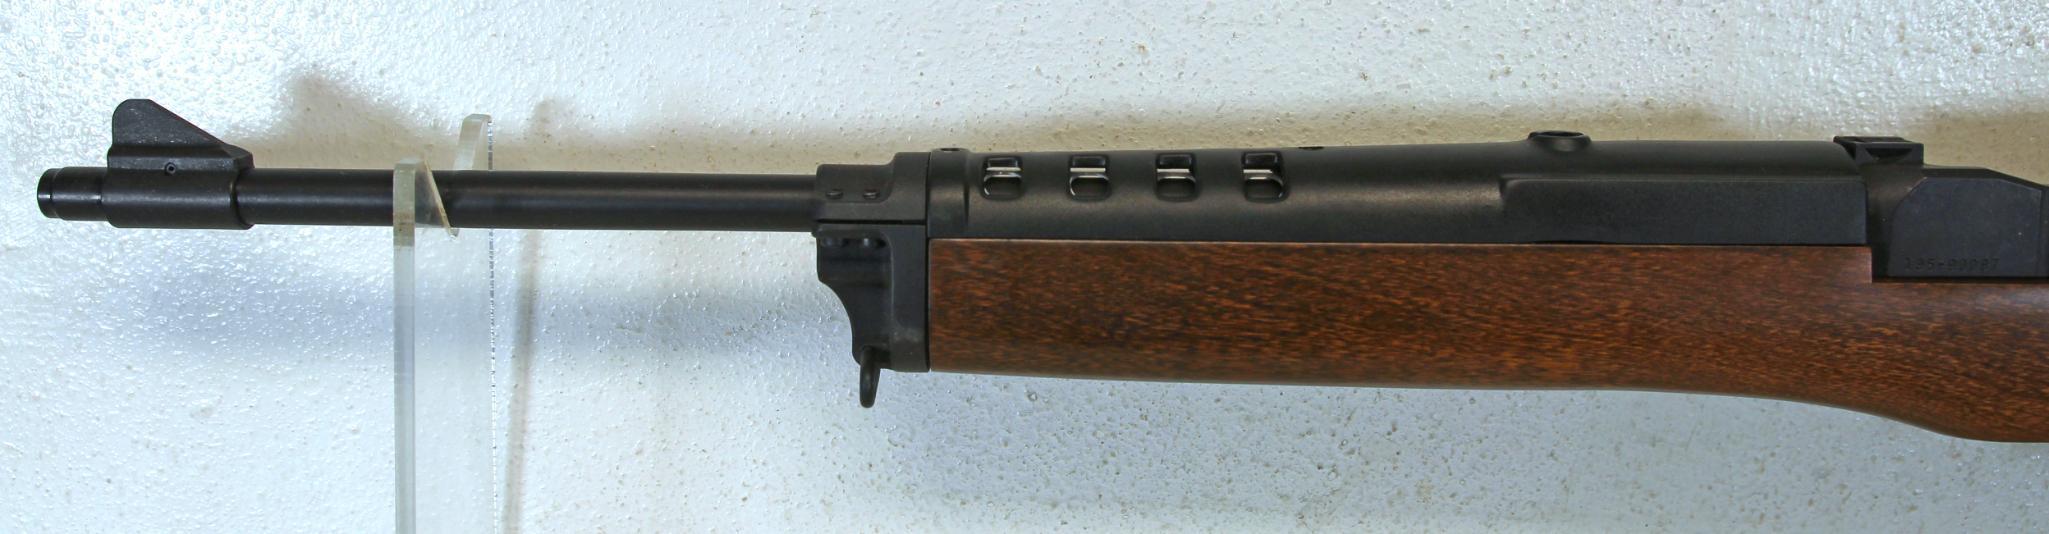 Ruger Ranch Rifle Mini-14 50 Yr. Ann. 1949-1999 .223 Rem. Semi-Auto Carbine Rifle, New in Box